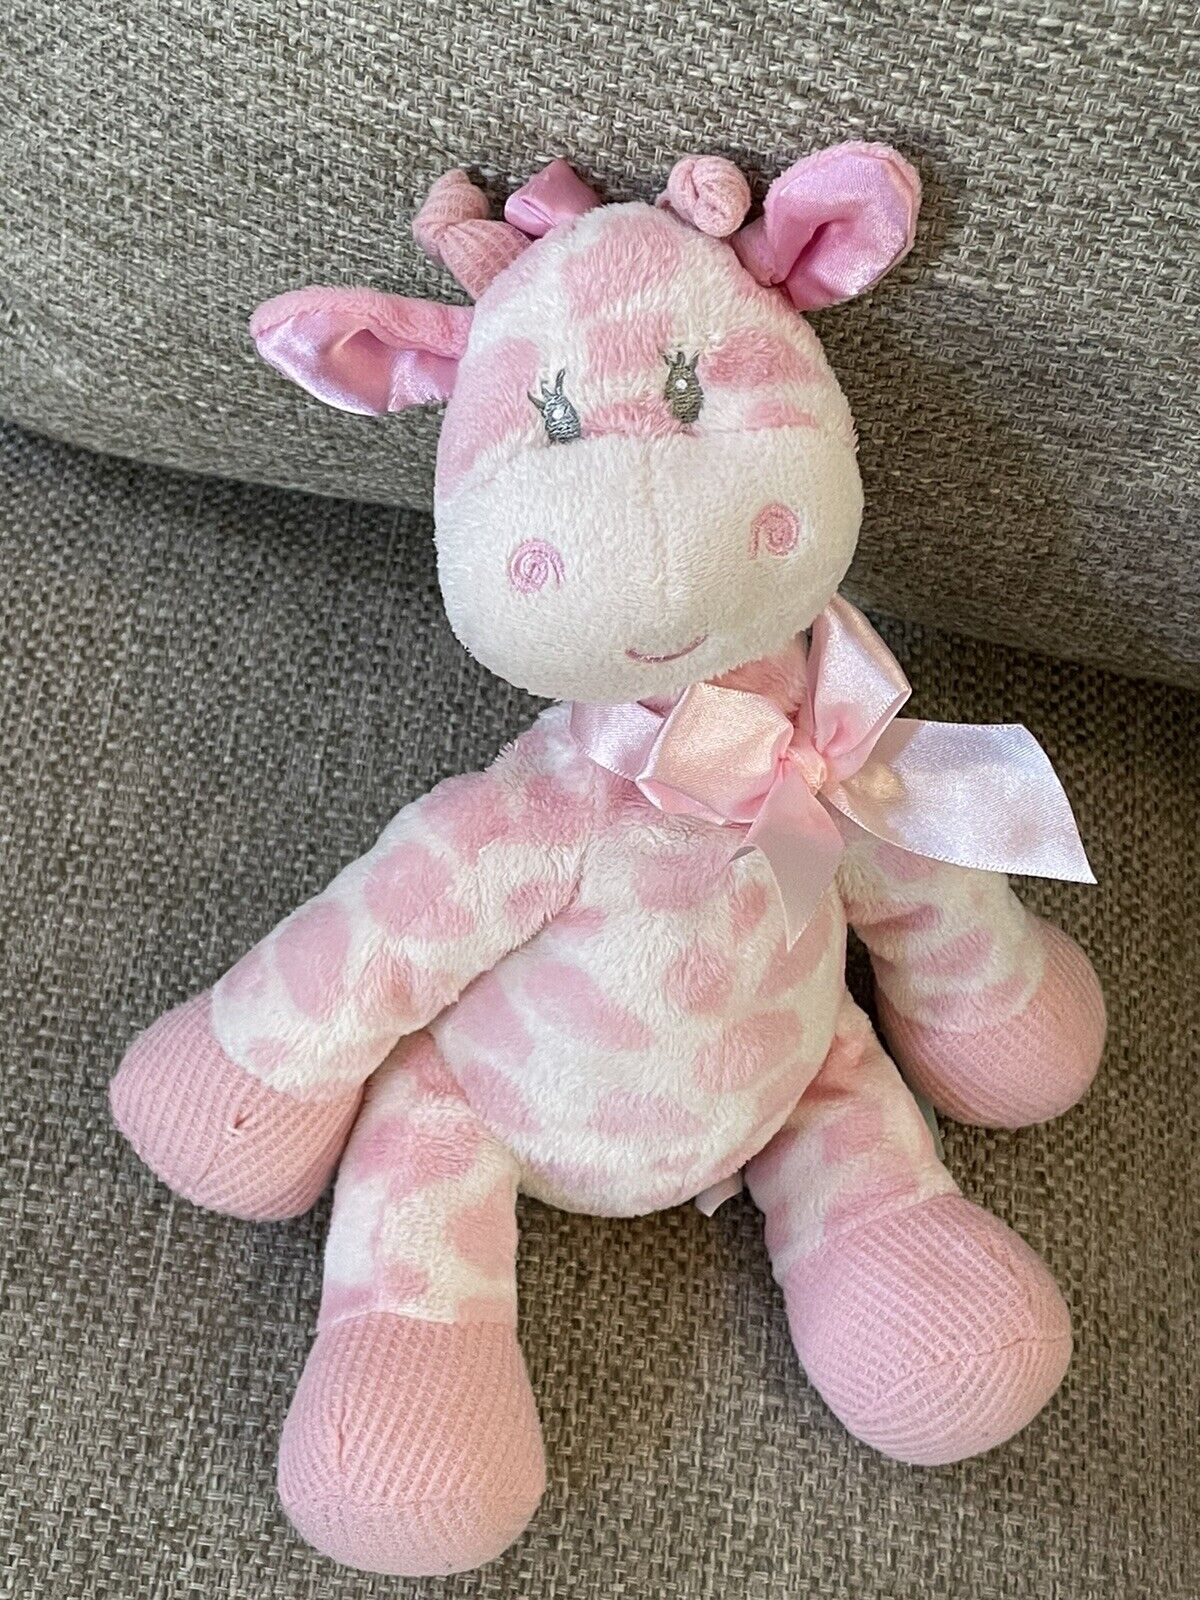 First & Main 9" Jingles the Pink Giraffe Rattle Plush Toy Stuffed Animal